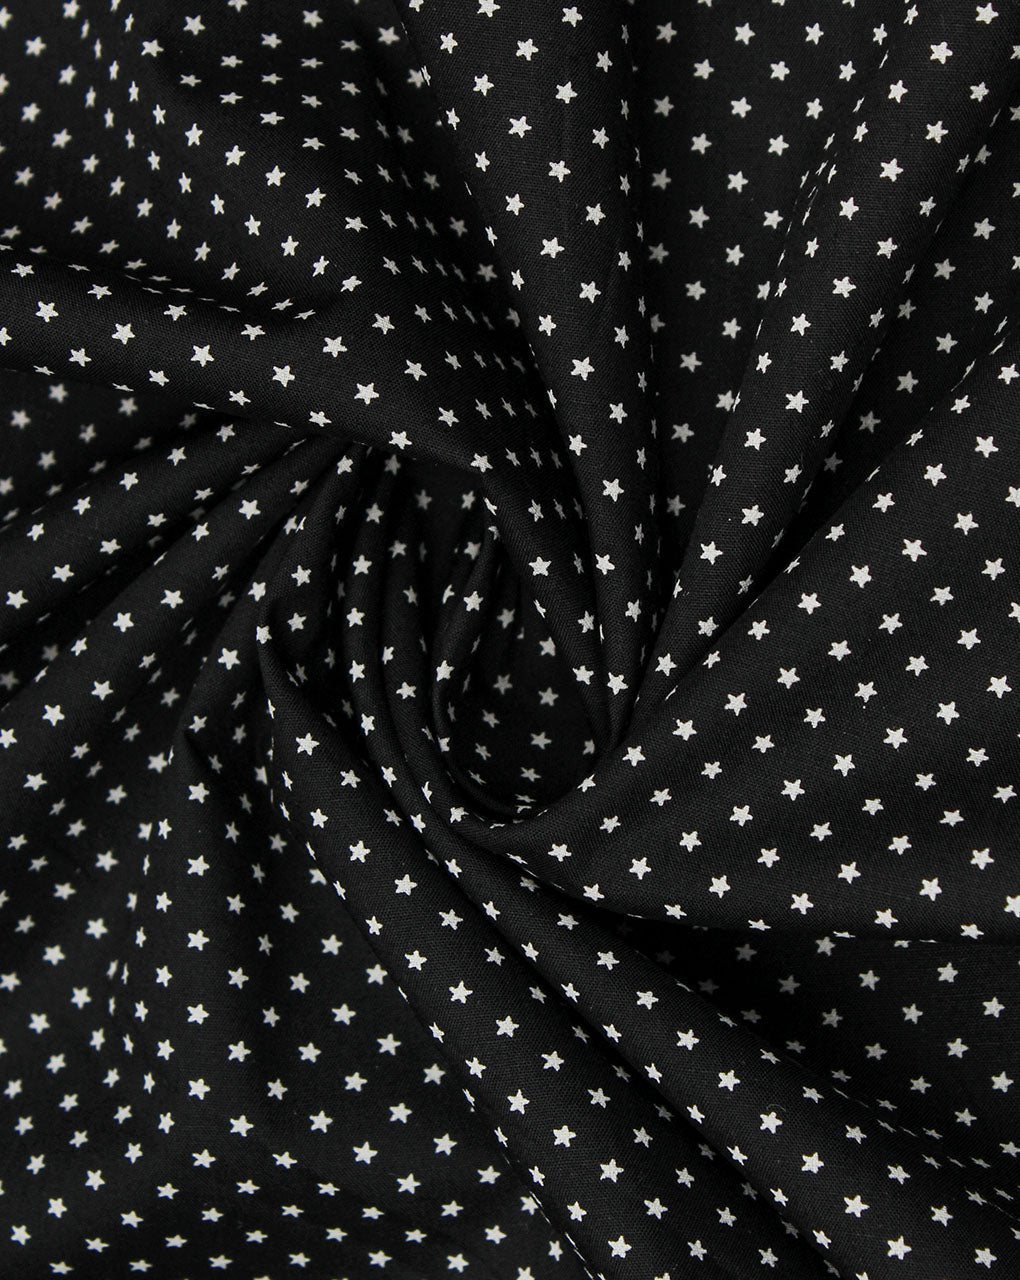 Black And White Star Design Cotton Print Fabric